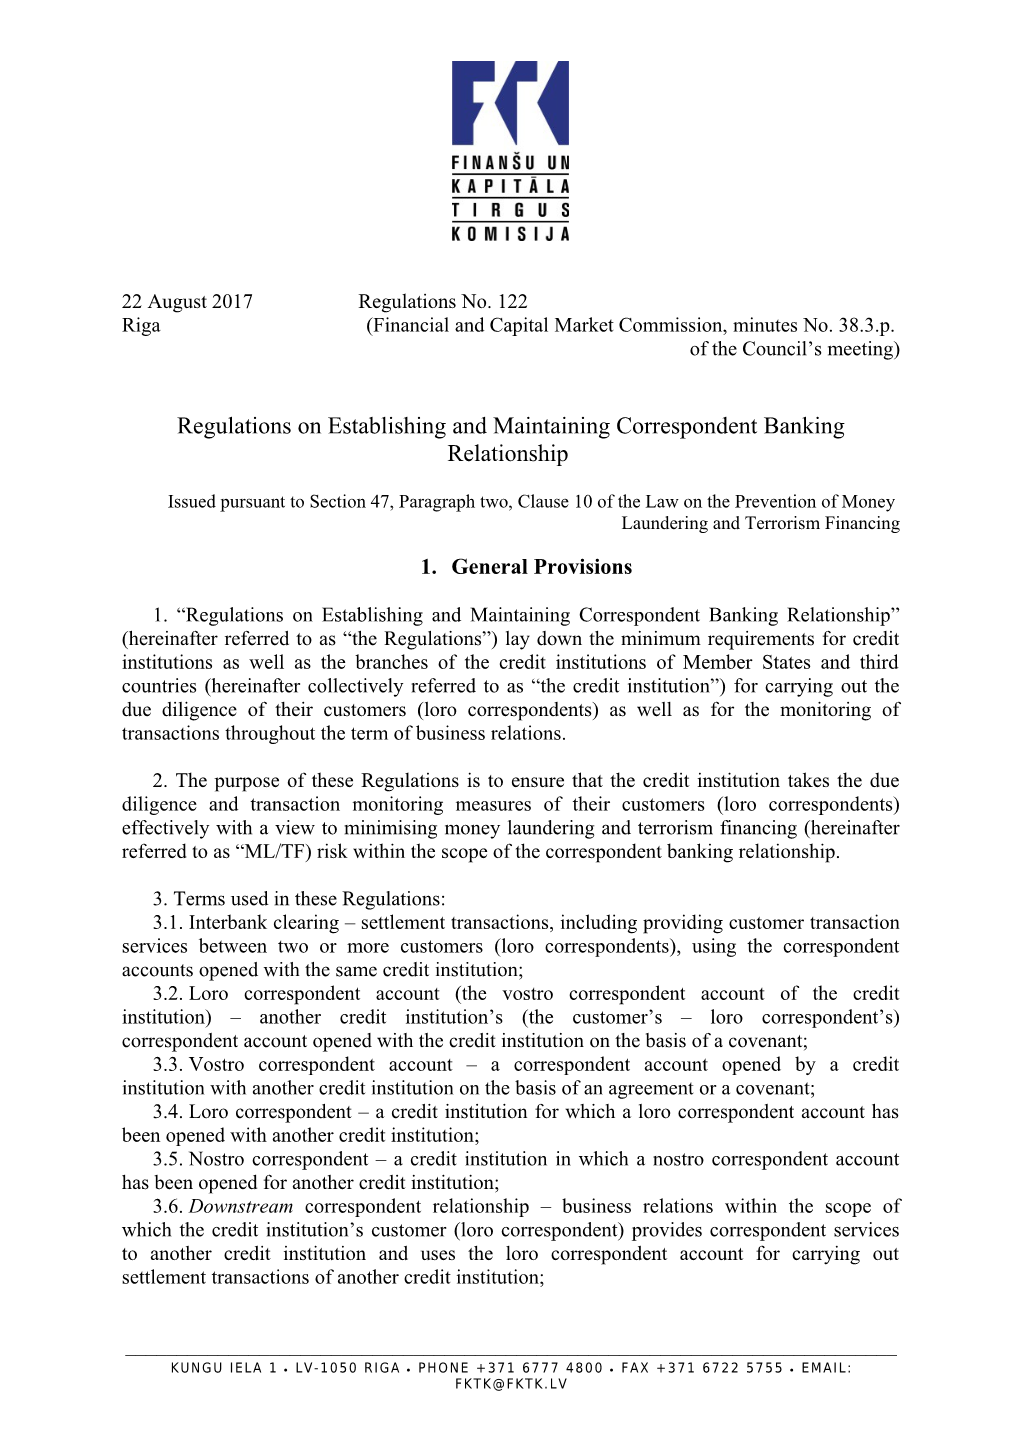 Riga (Financial and Capital Market Commission, Minutes No. 38.3.P